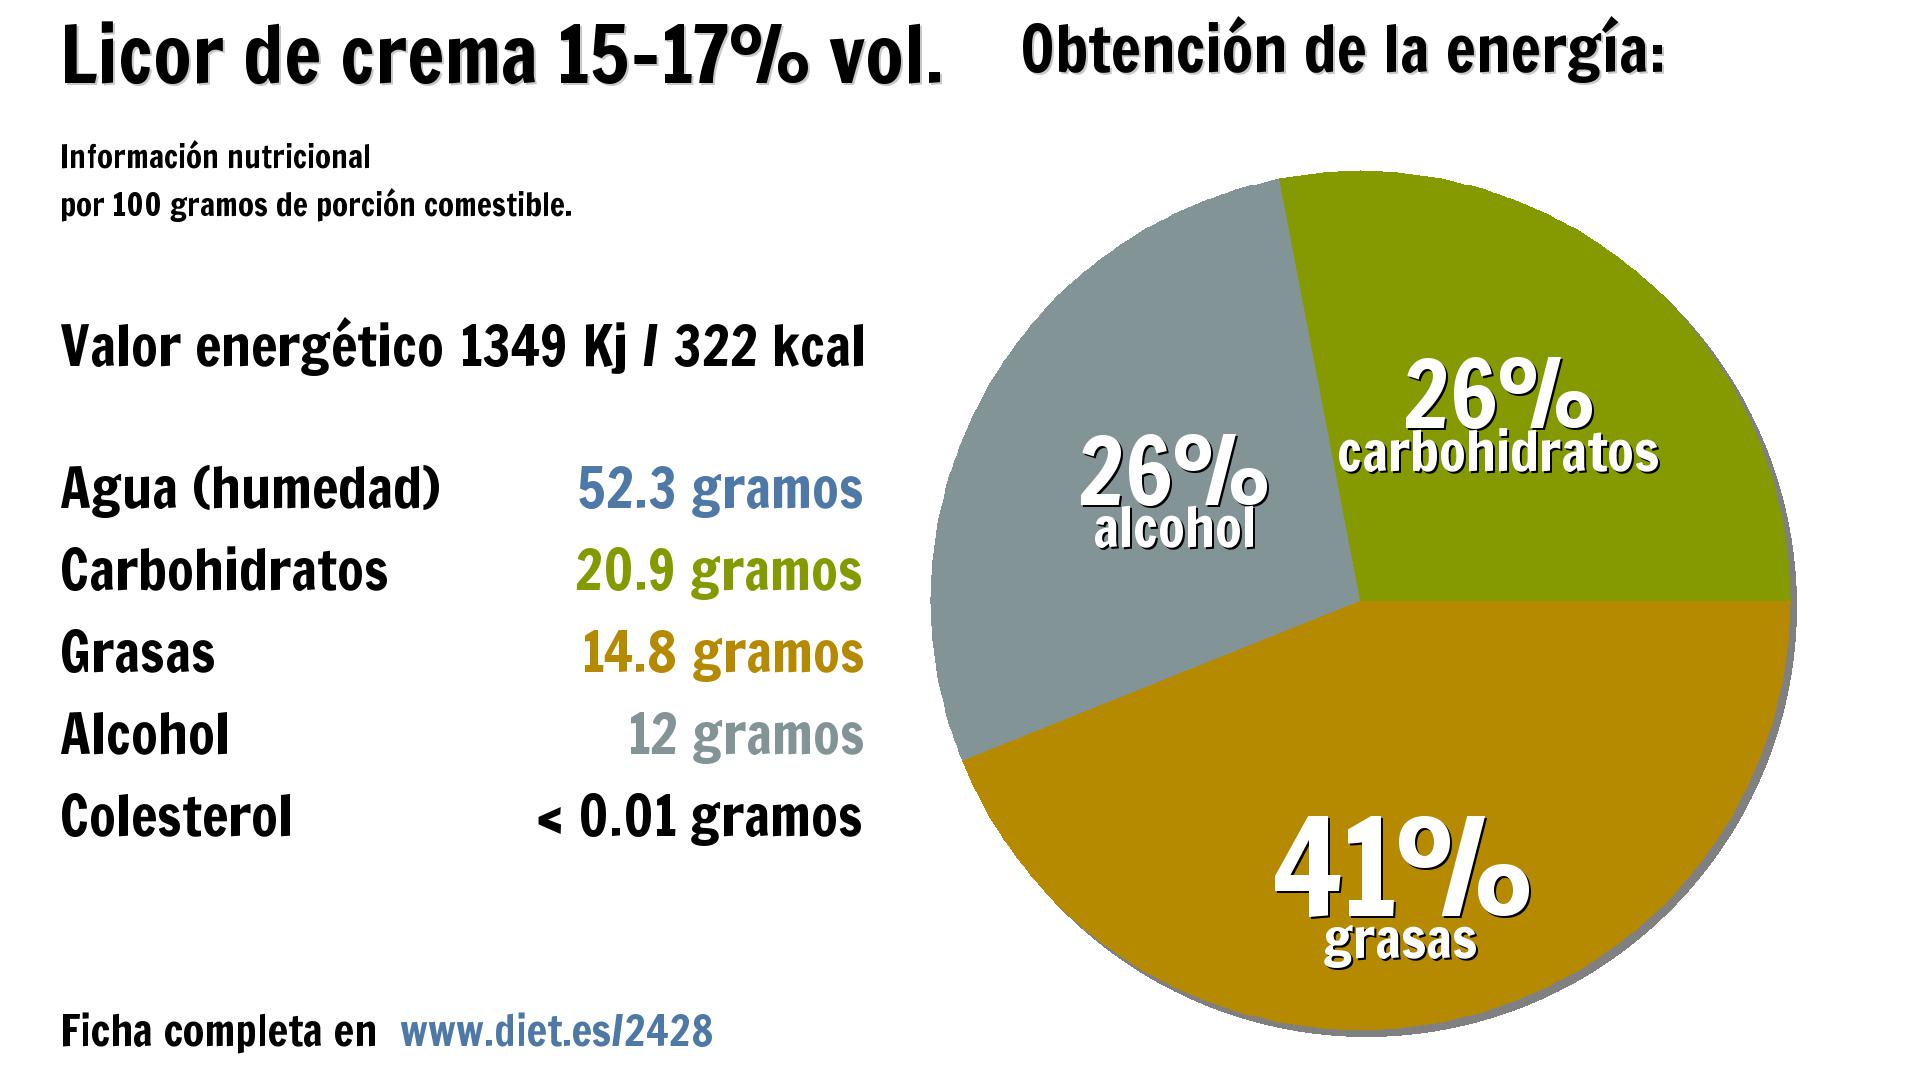 Licor de crema 15-17% vol.: energía 1349 Kj, agua 52 g., carbohidratos 21 g., grasas 15 g. y alcohol 12 g.